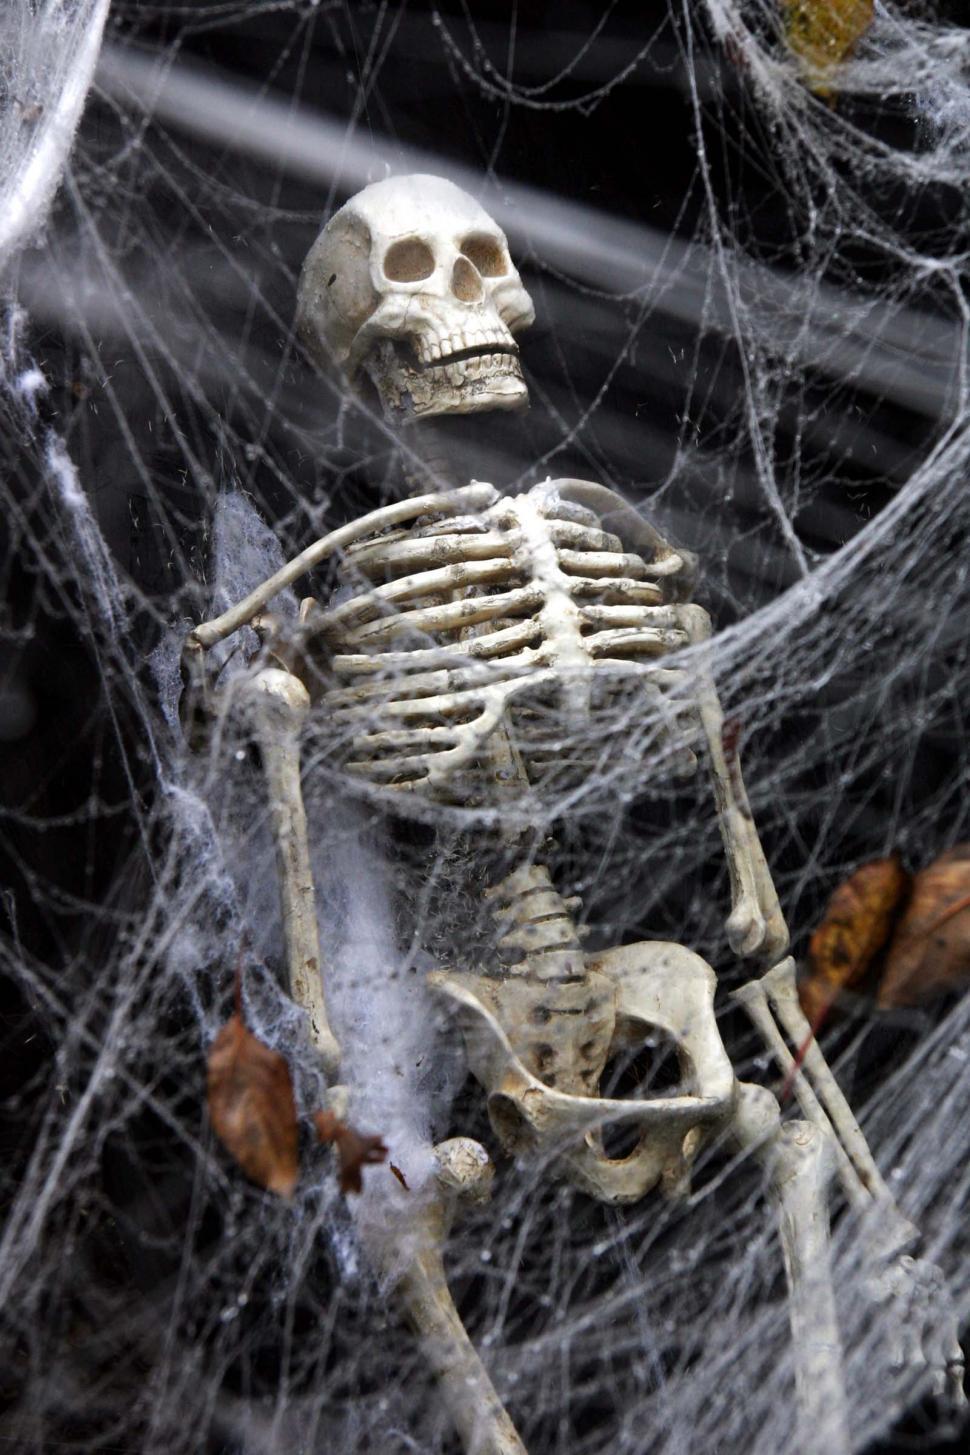 Free Image of Skeleton Sitting in Spider Web 